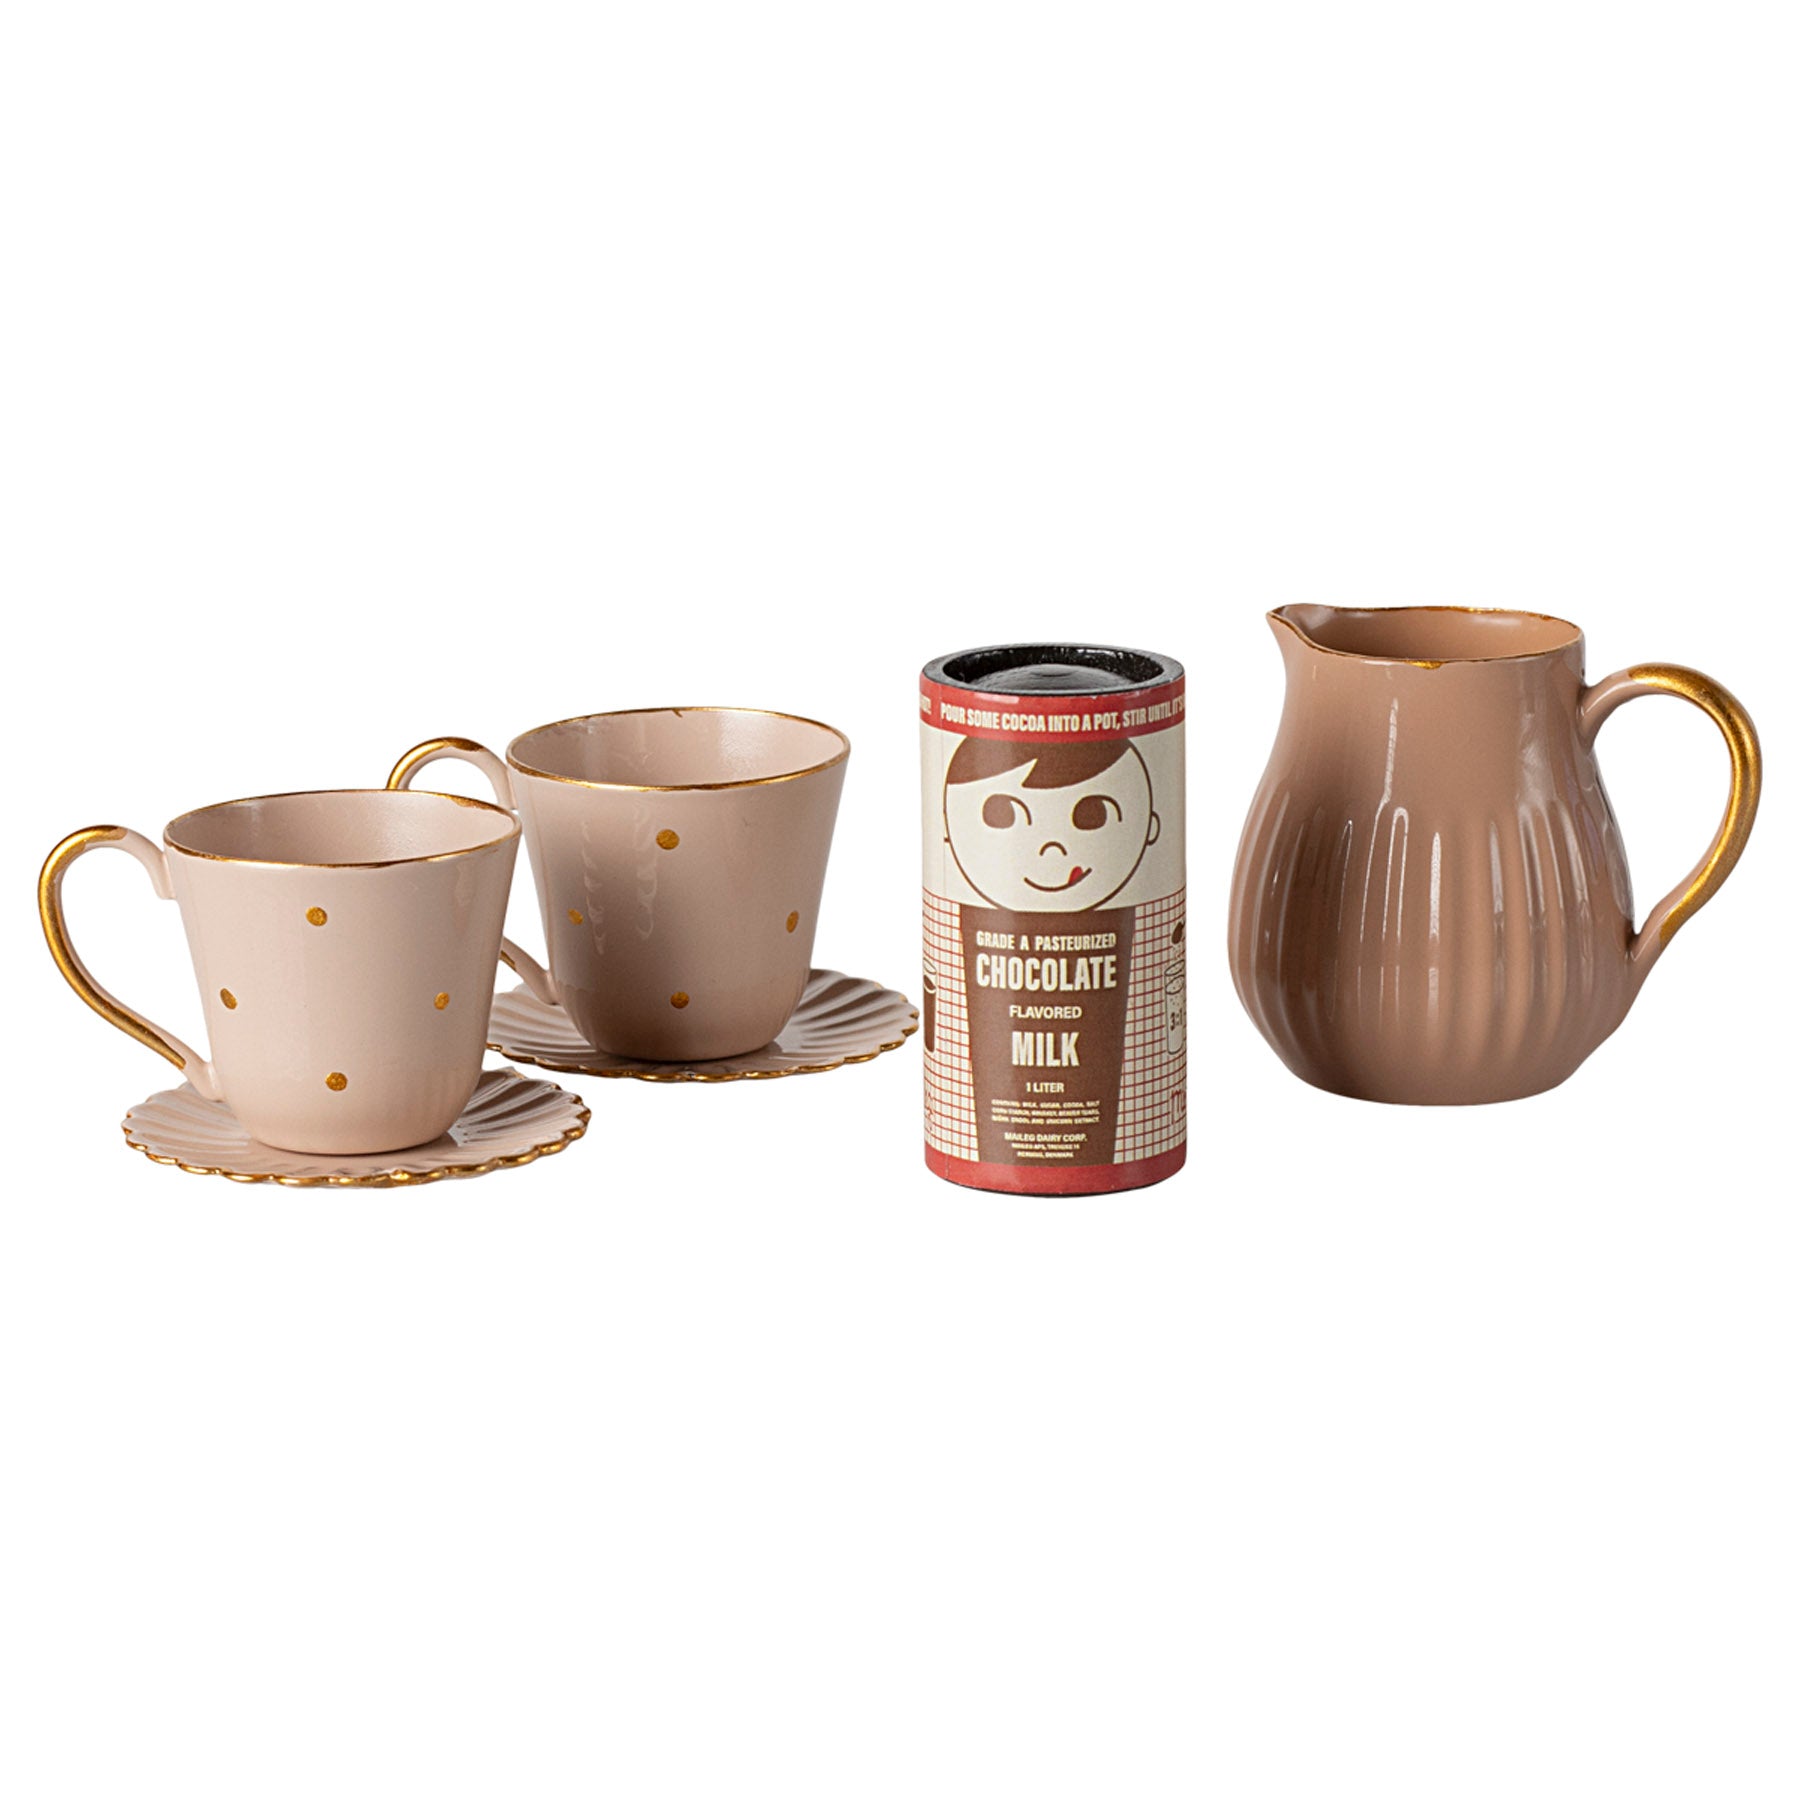 maileg pink jug, 2 cups and saucers and a hot chocolate carton